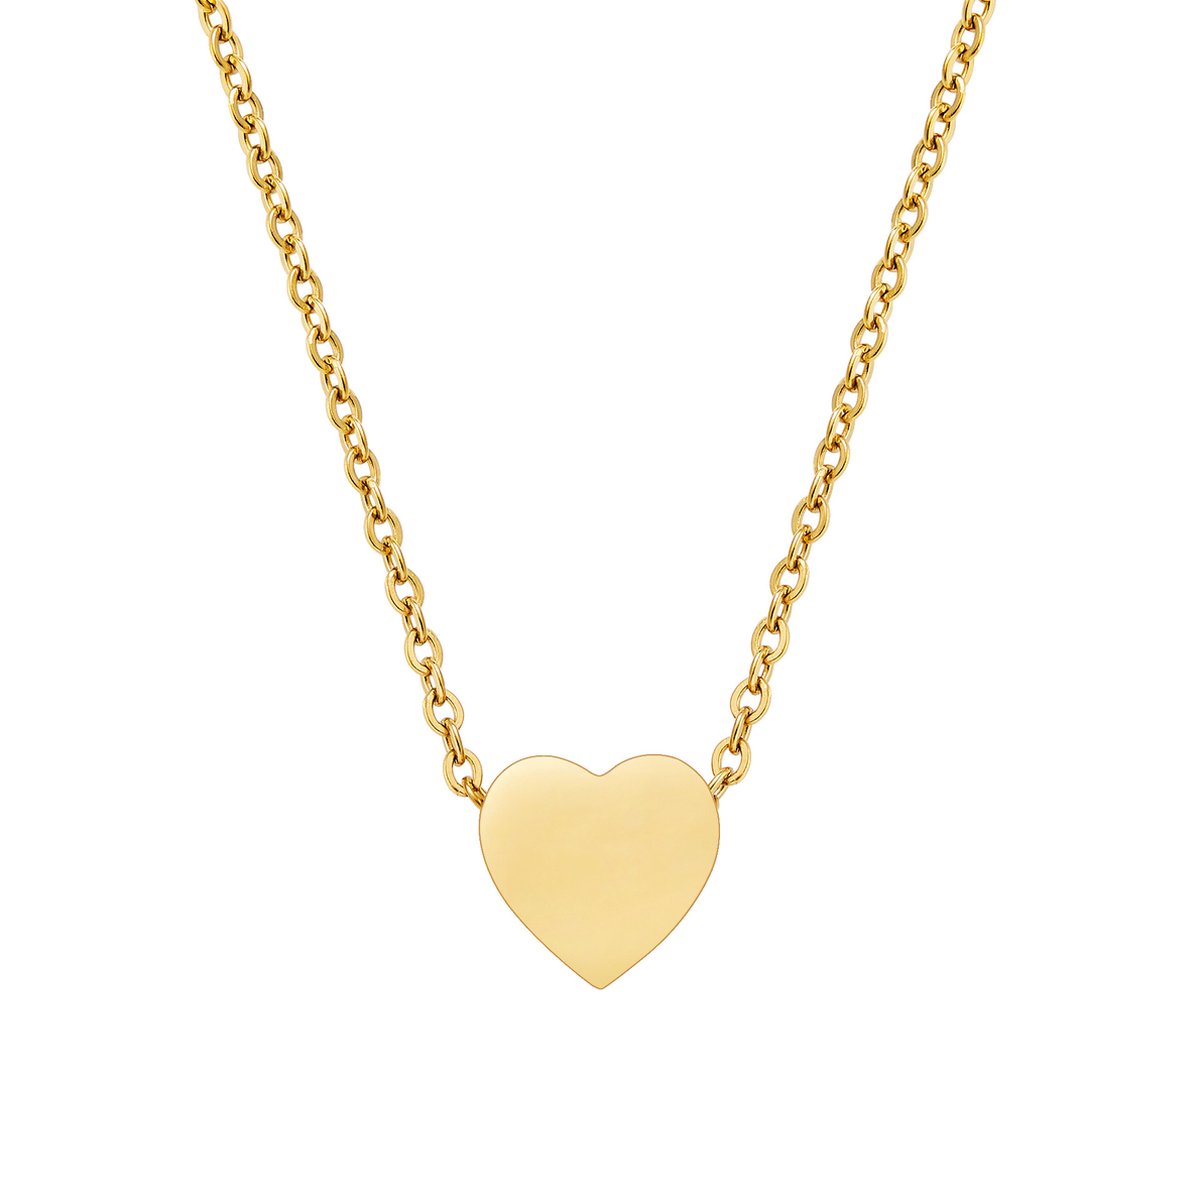 Halsketting goud met hartje dames - Goudkleurige halskettingen met hartjes van Sophie Siero - inclusief geschenkverpakking - Sieraad- Halsketting goudkleurig